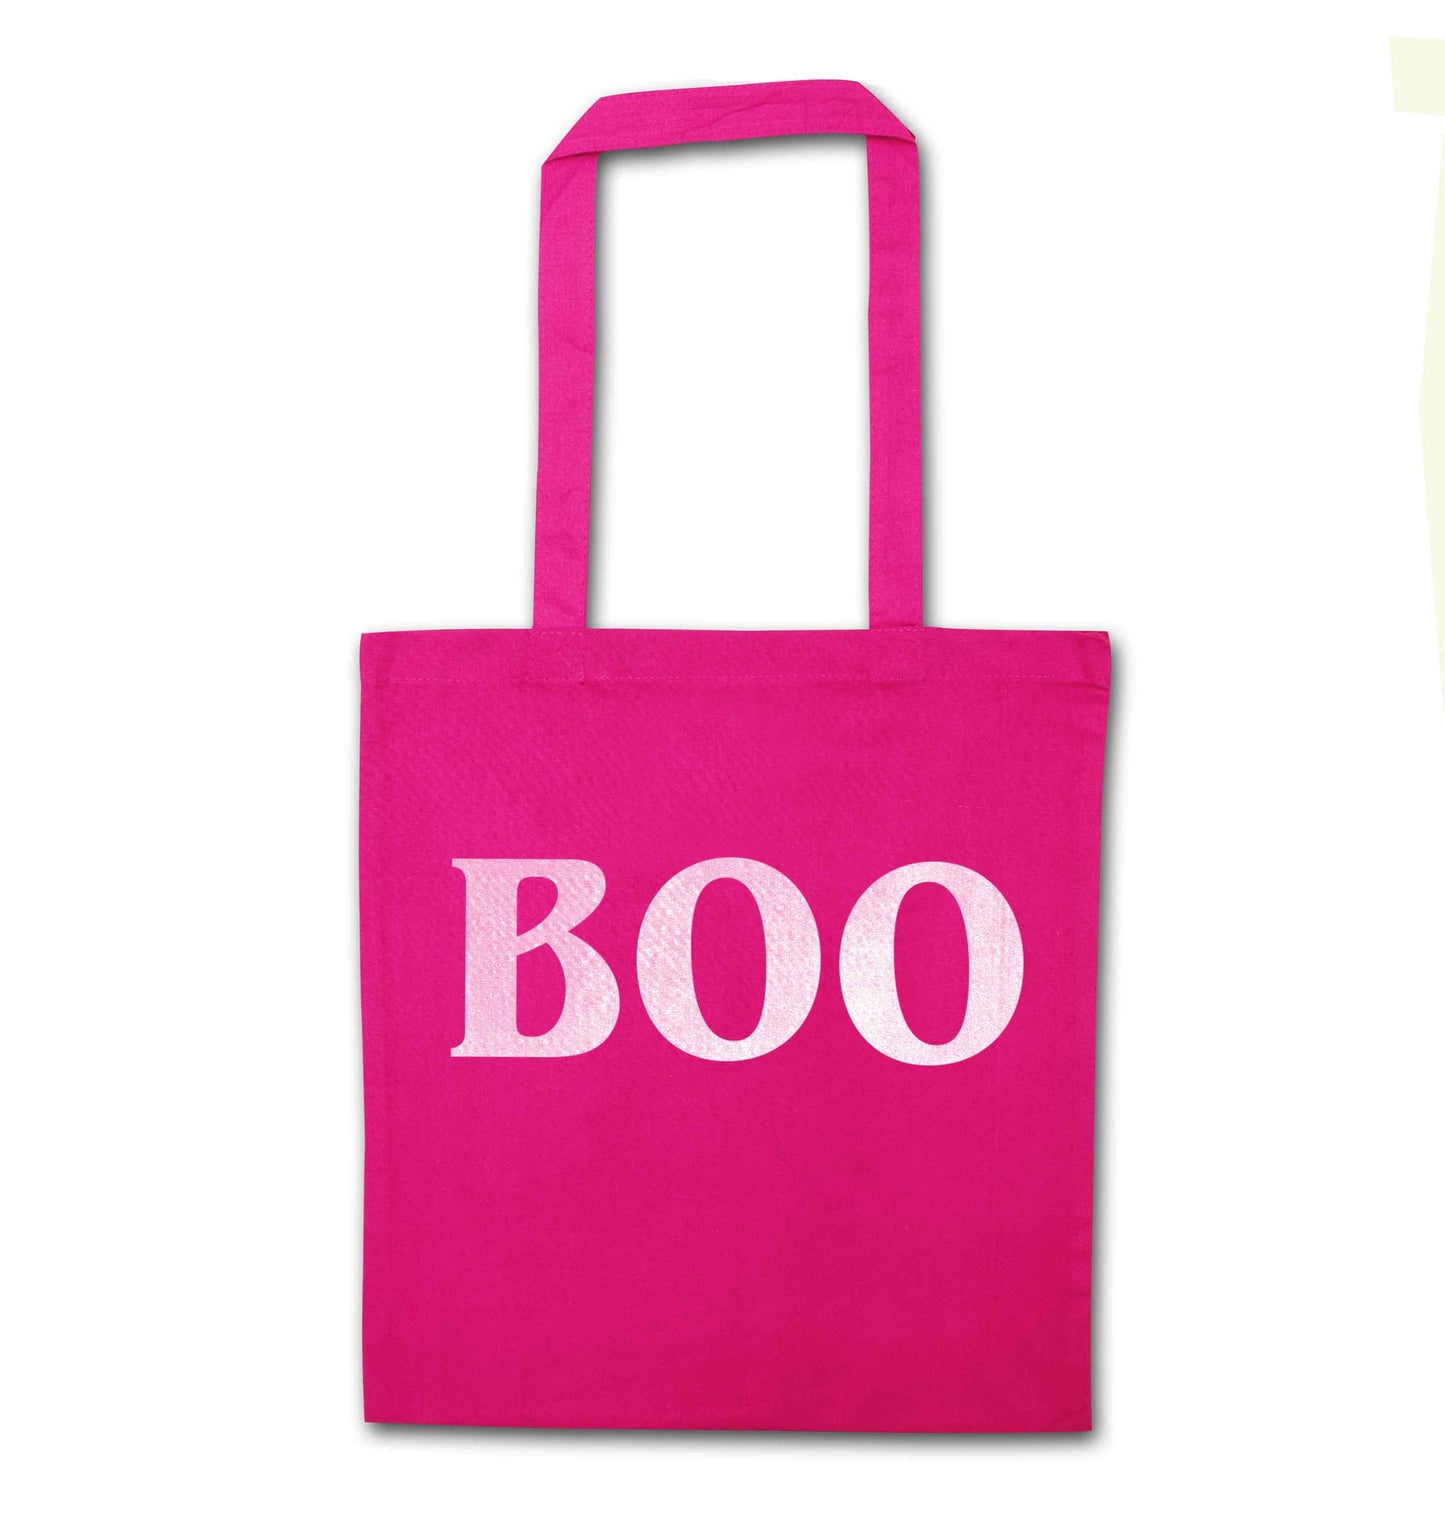 Boo pink tote bag